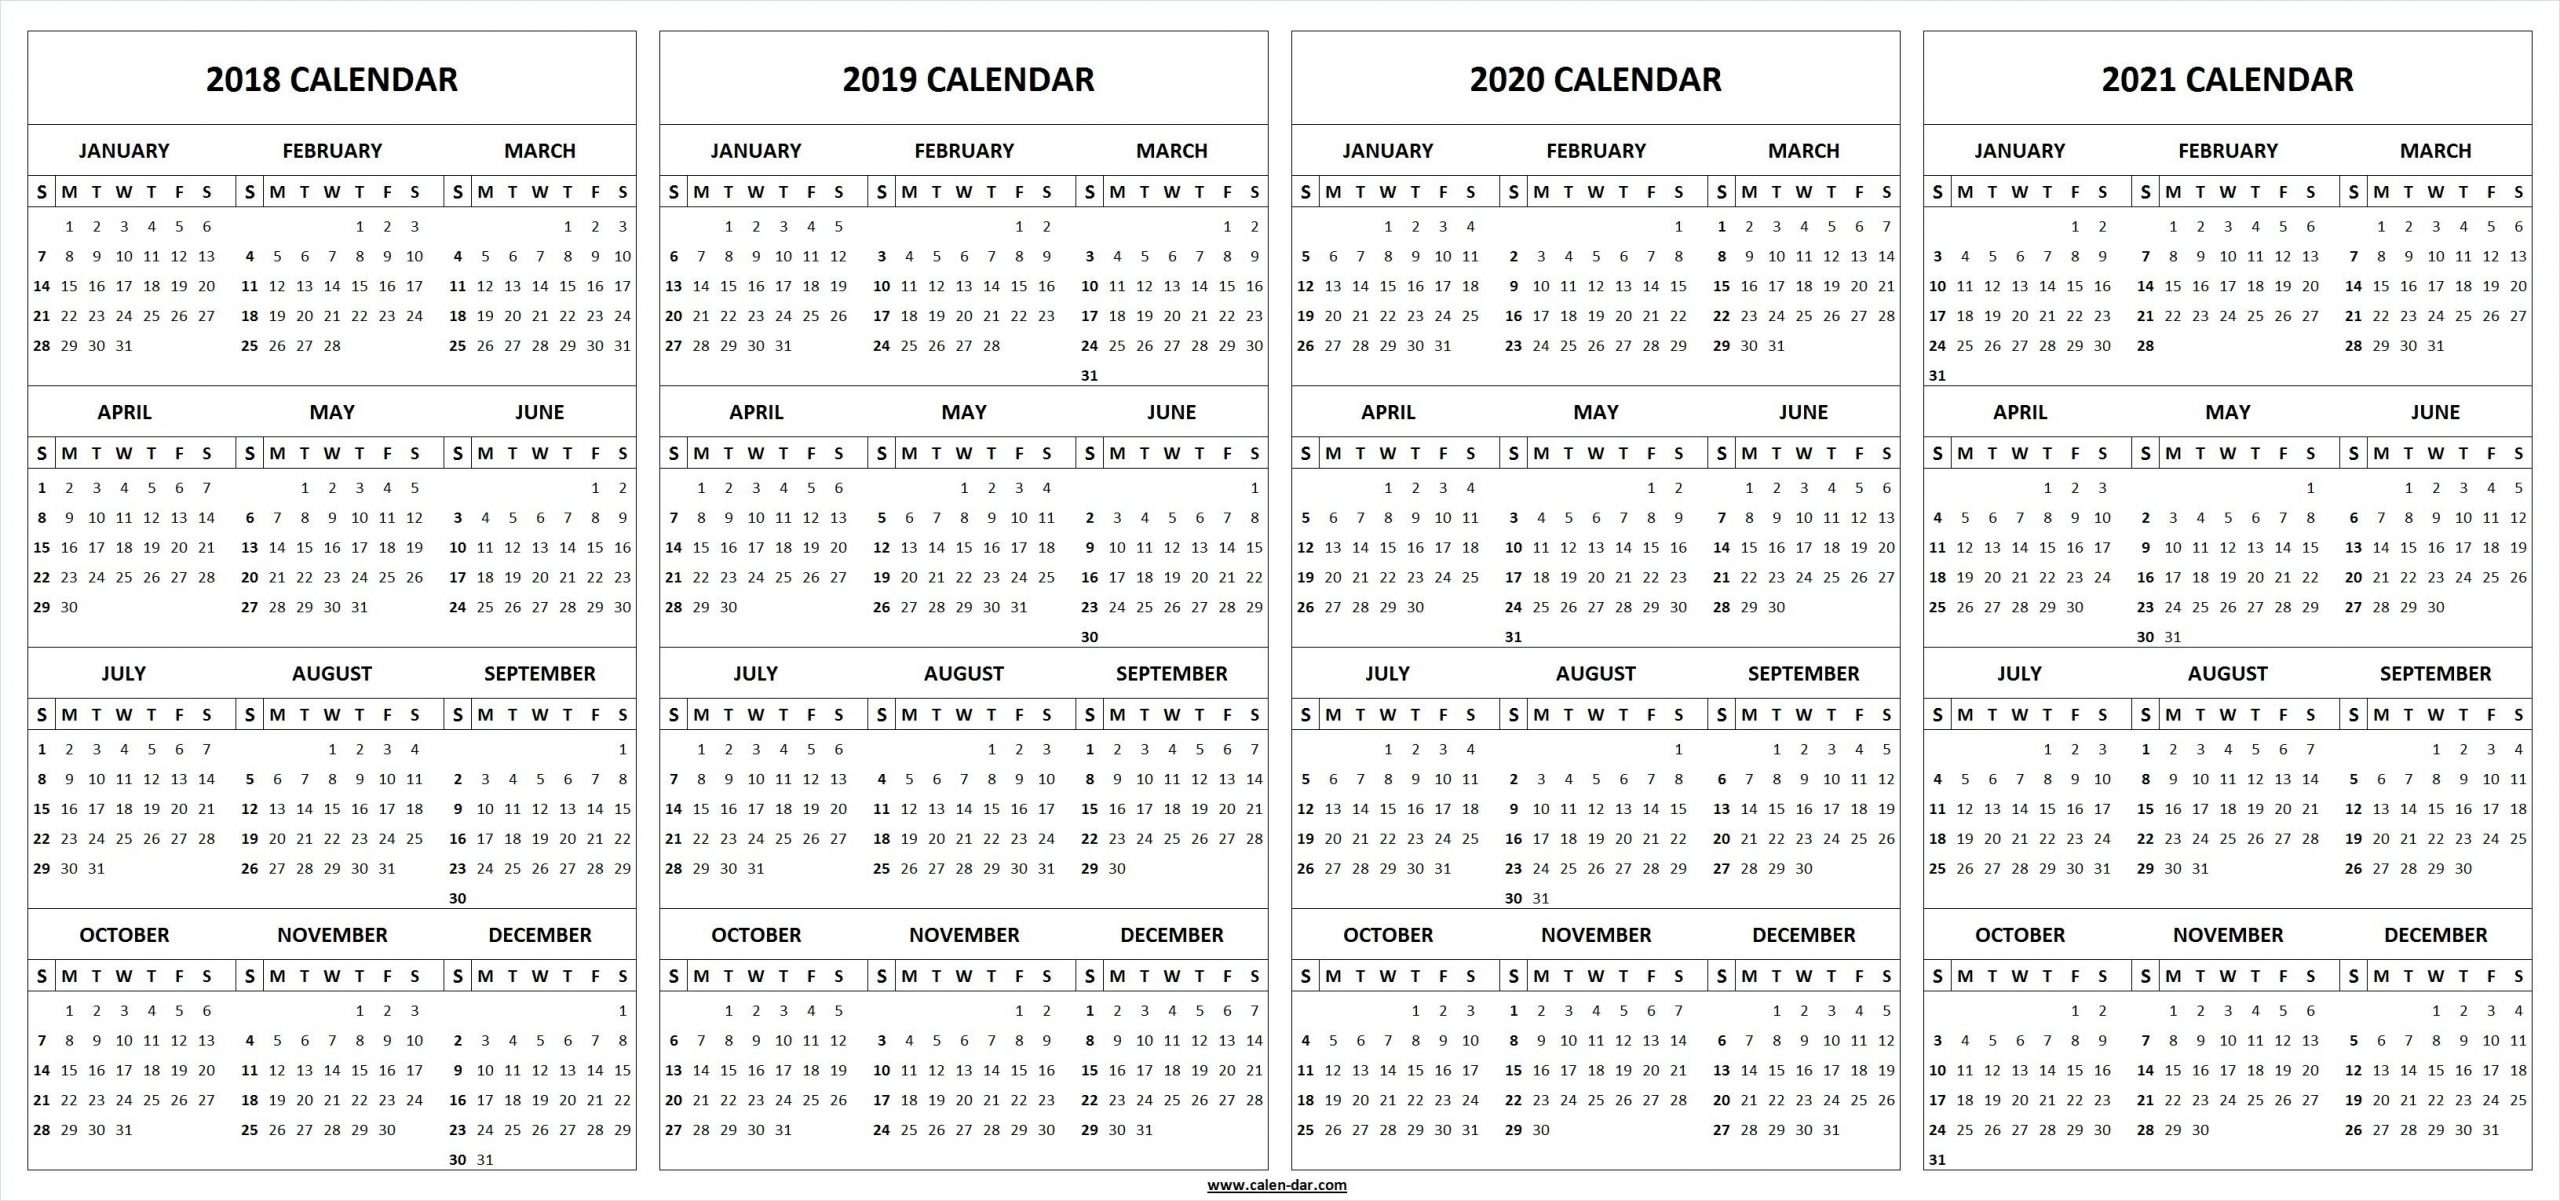 4 Four Year 2018 2019 2020 2021 Calendar Printable Template 4 Year Calendar Template